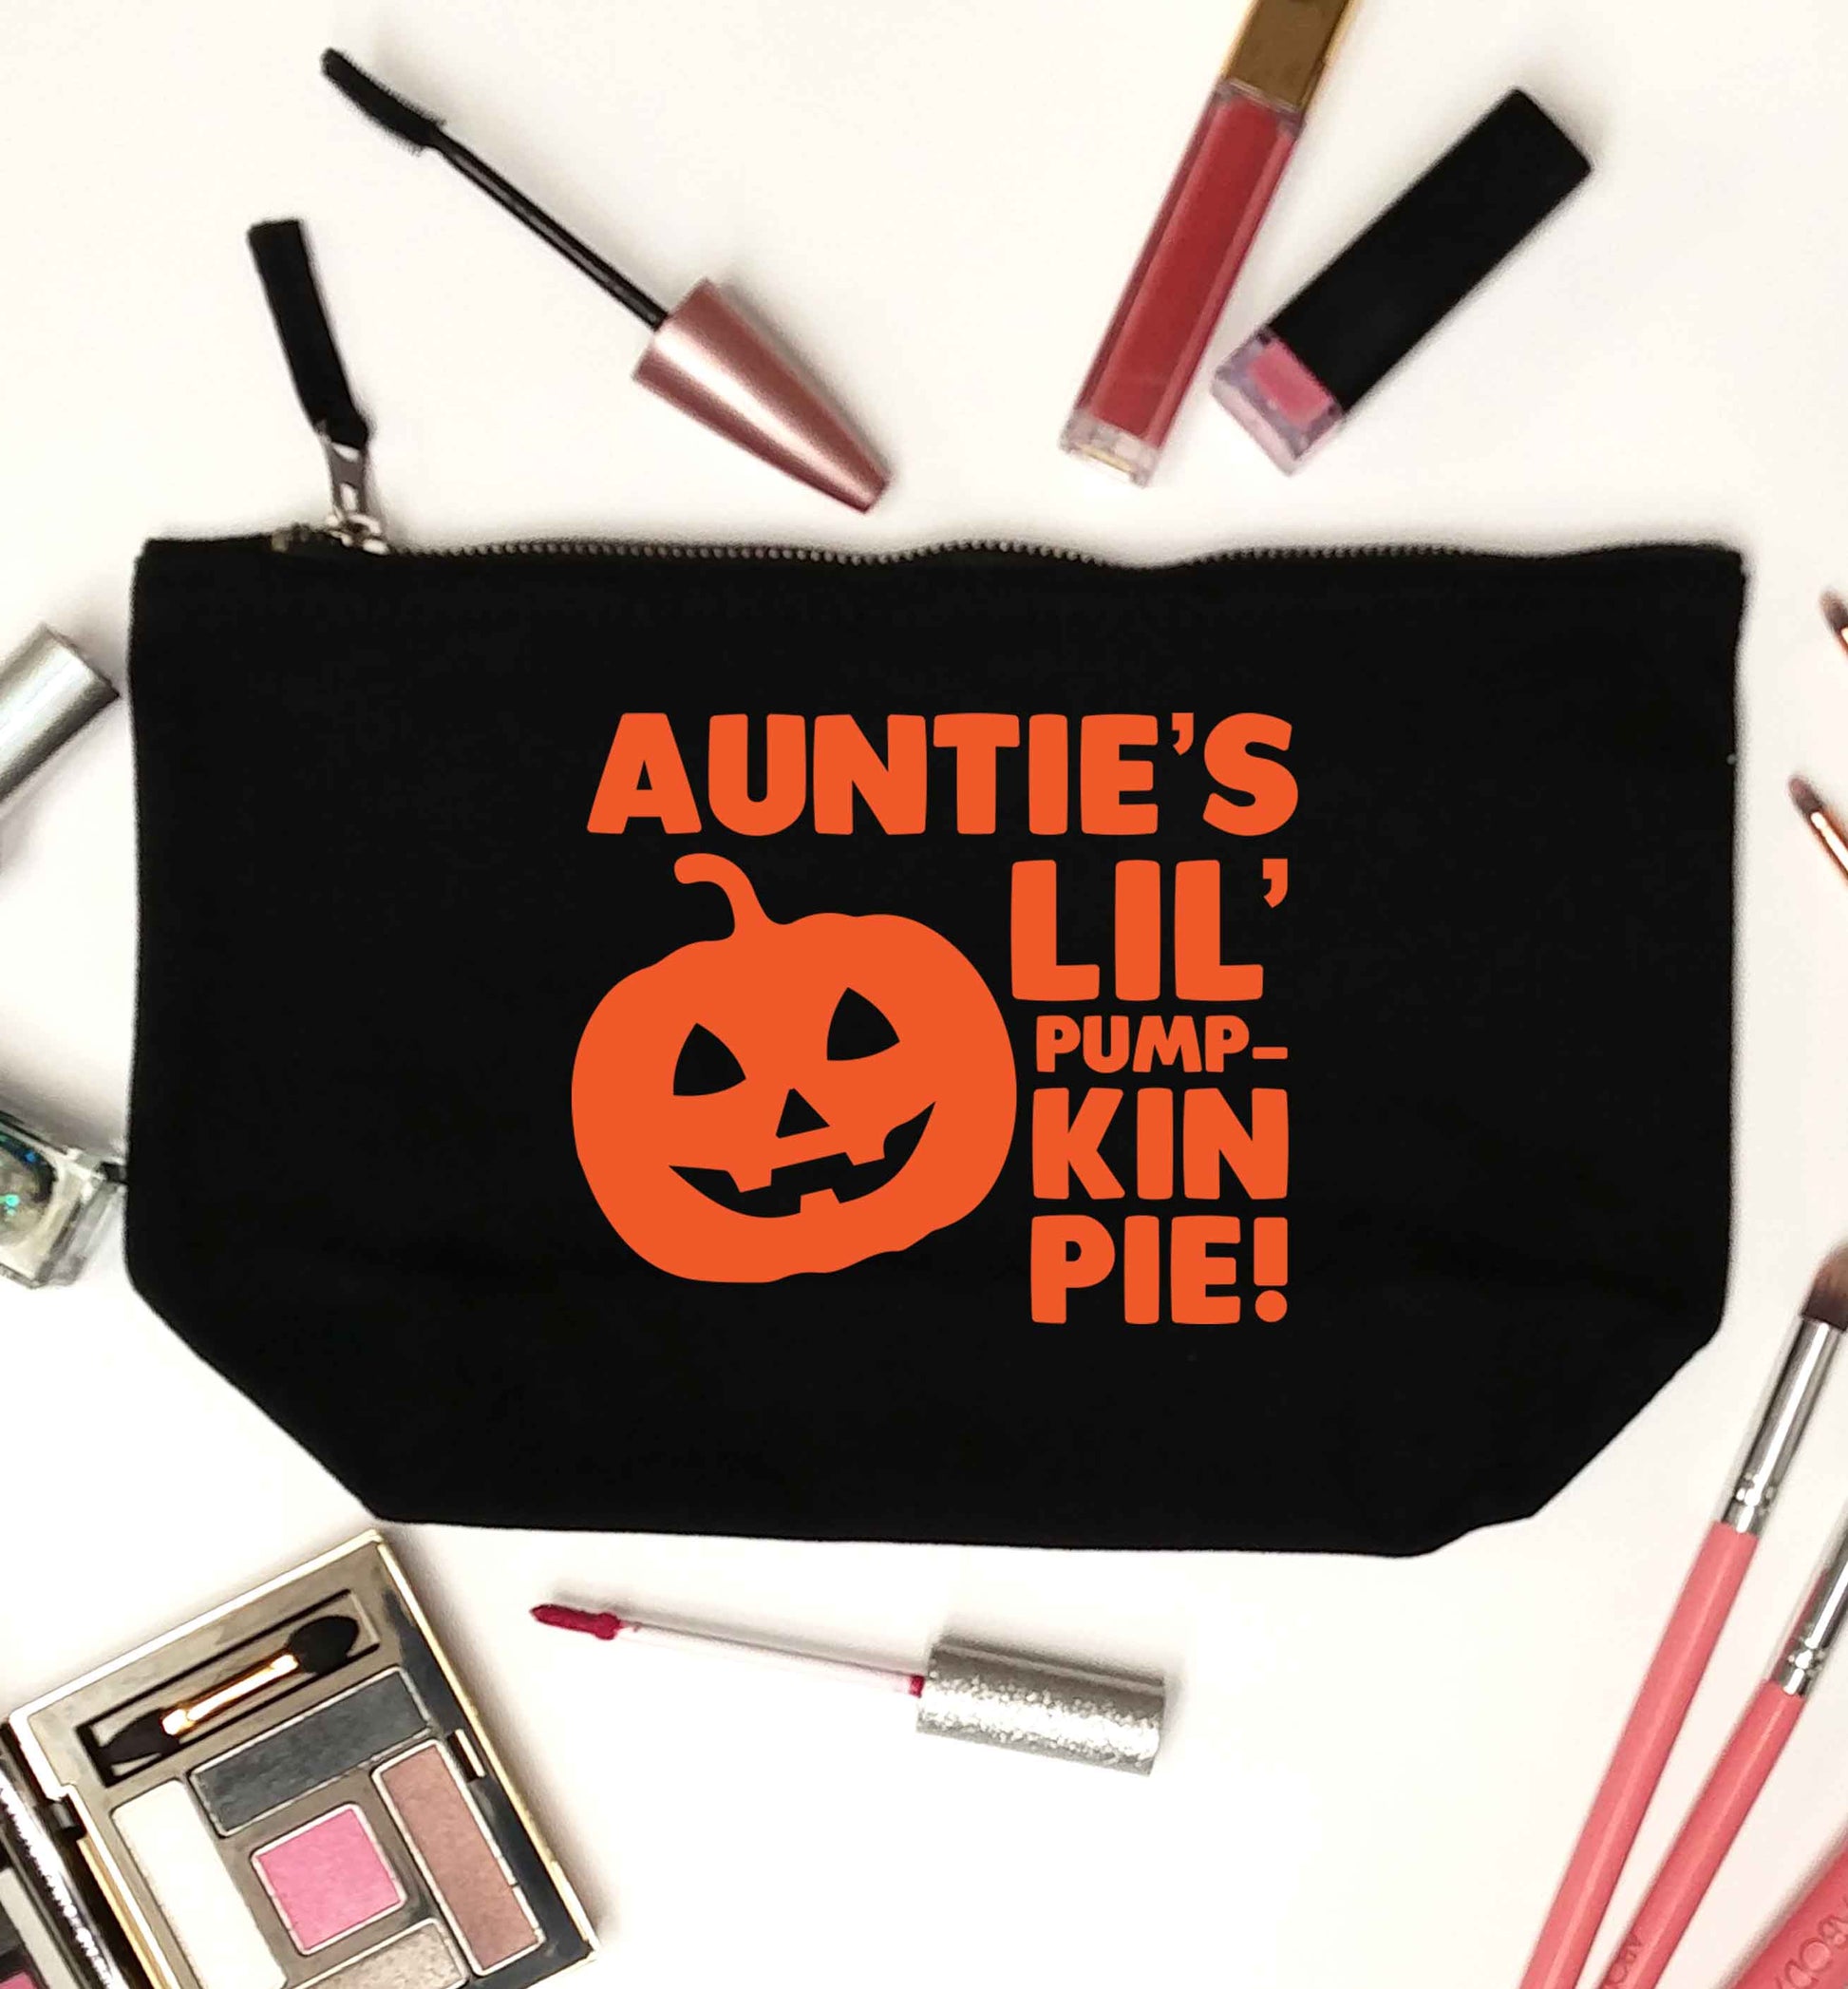 Auntie's lil' pumpkin pie black makeup bag